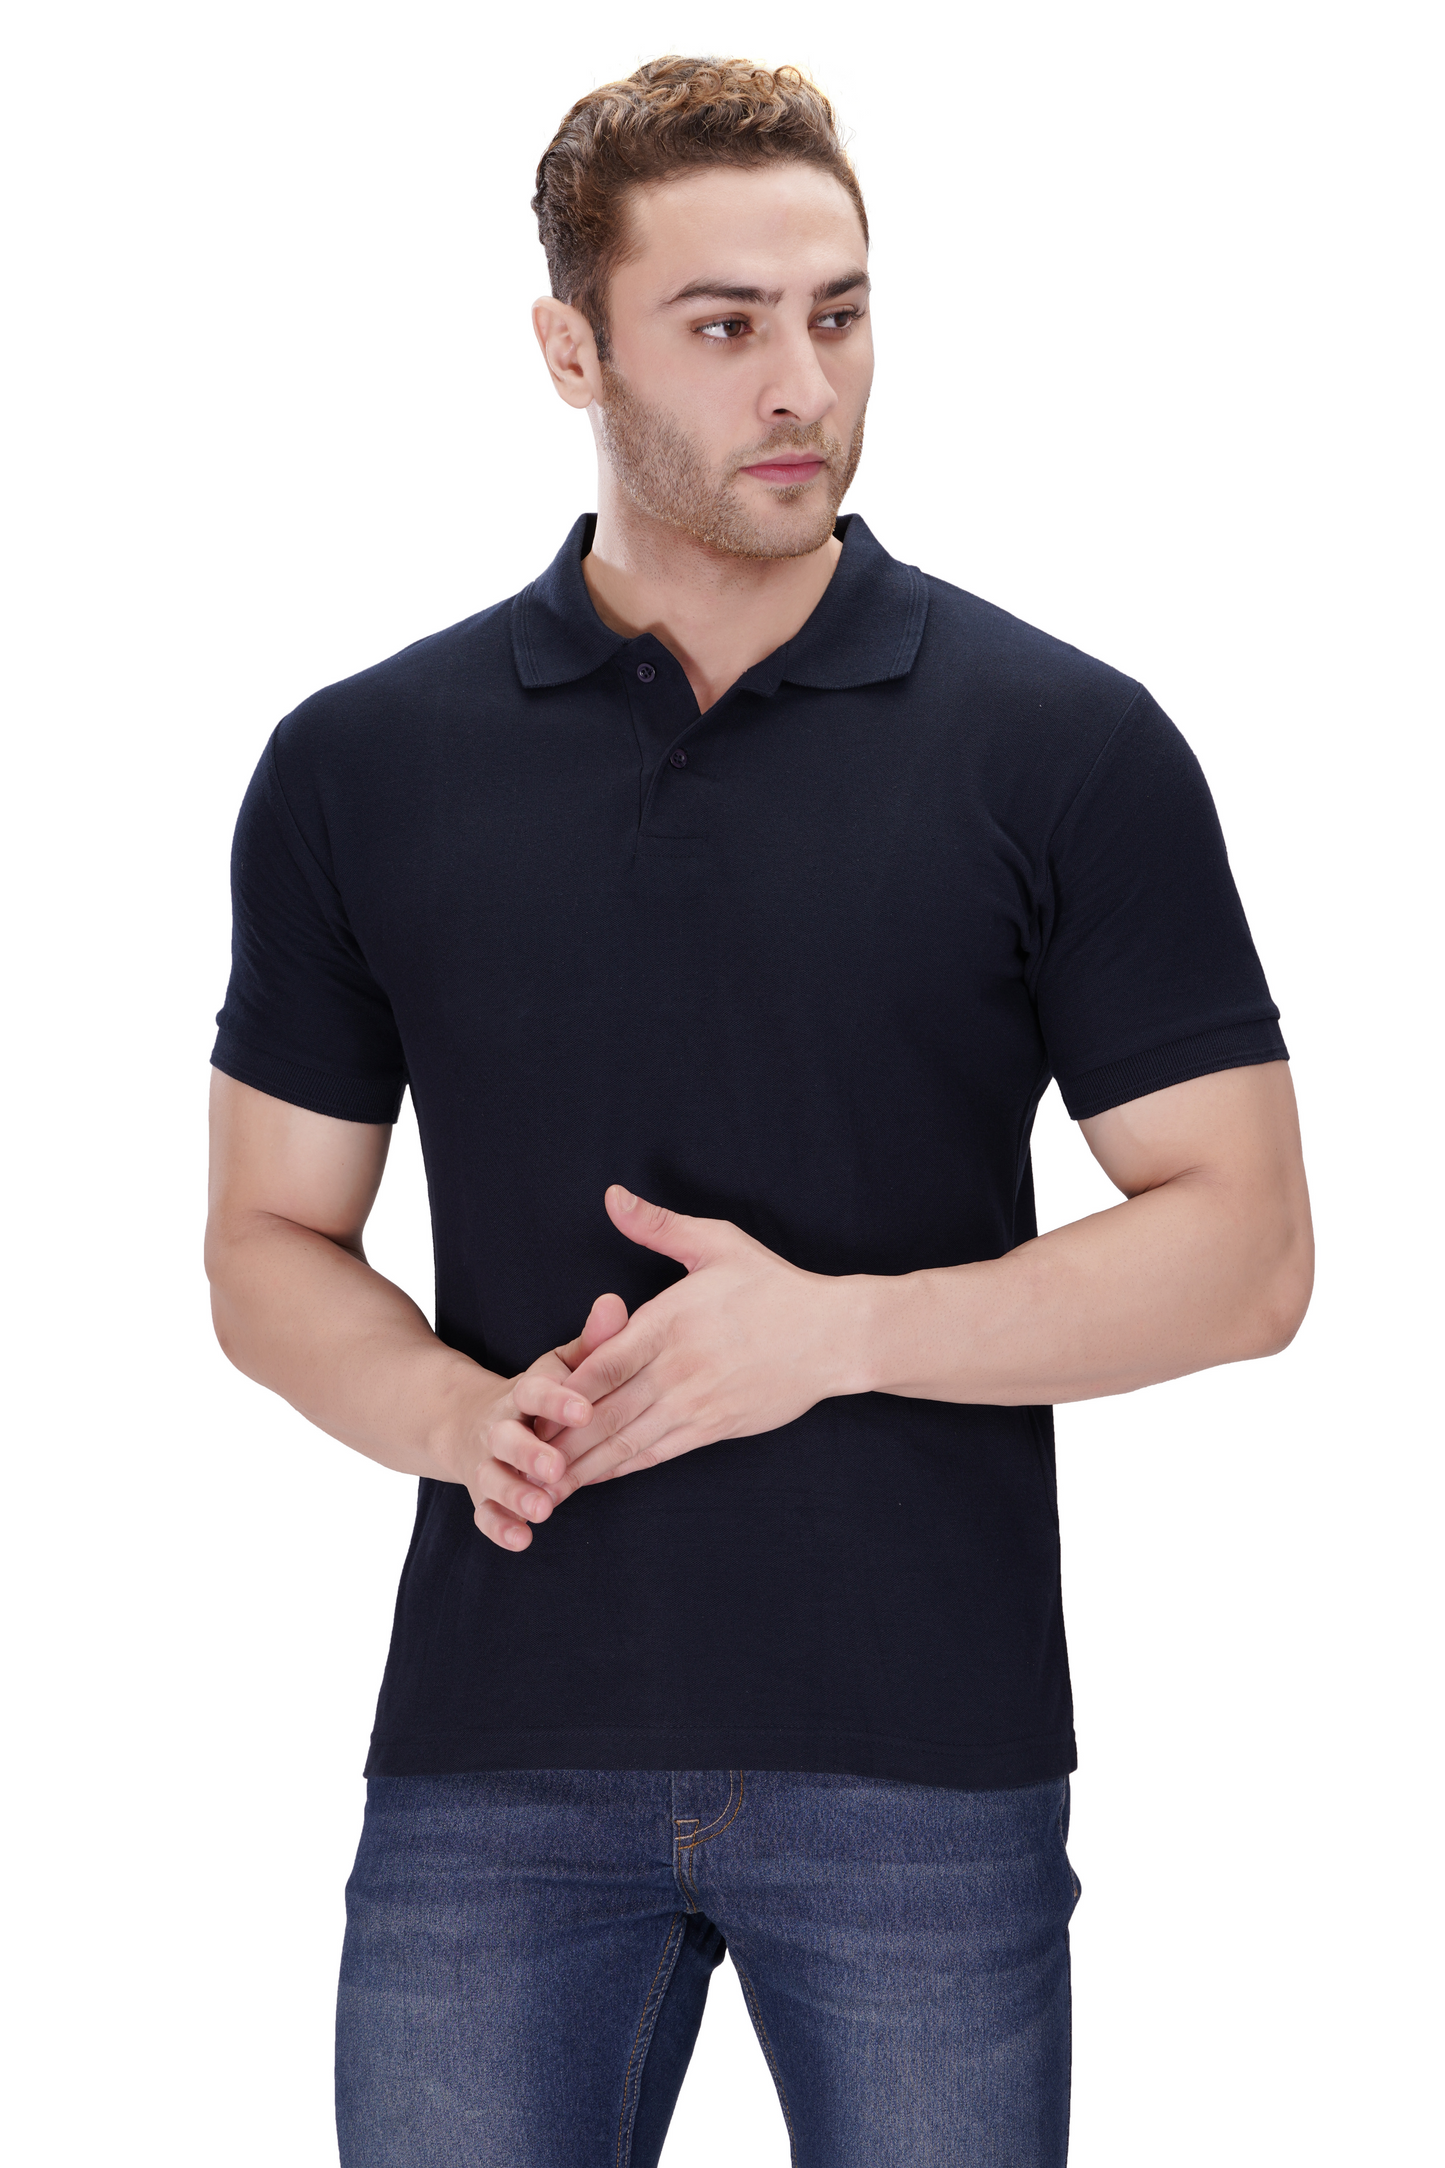 100% Cotton Men’s Half Sleeve Polo Neck T-Shirt - Navy Blue